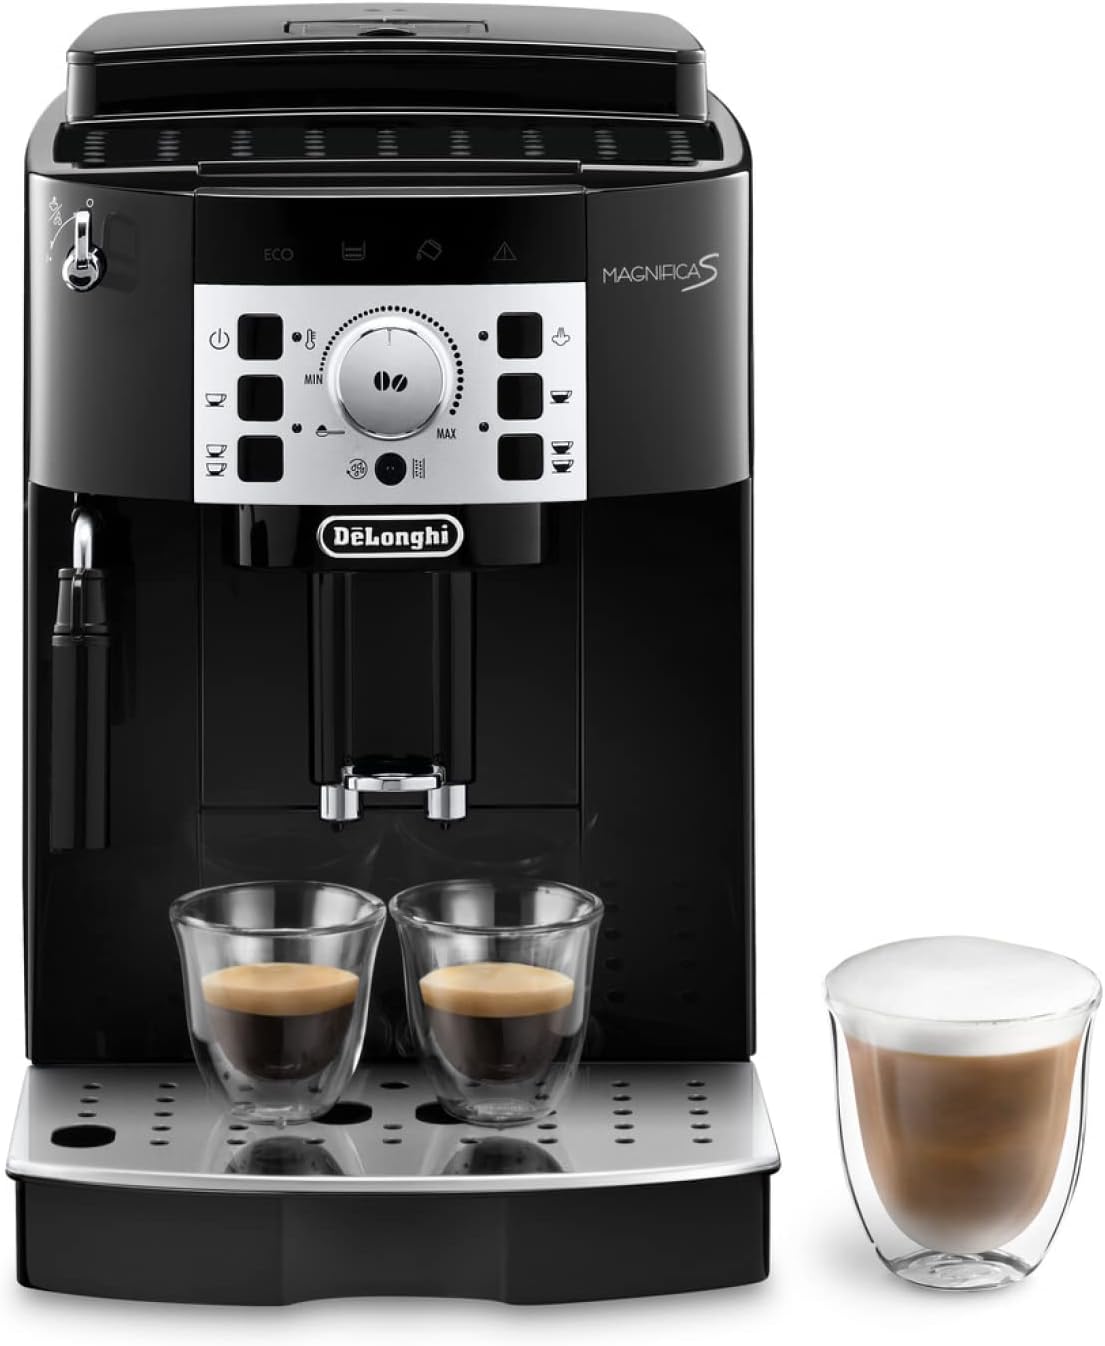 De'Longhi Magnifica S, Automatic Bean to Cup Coffee Machine, Espresso and Cappuccino Maker, ECAM22.110.B, 1.8 liters,Black [Amazon Exclusive]